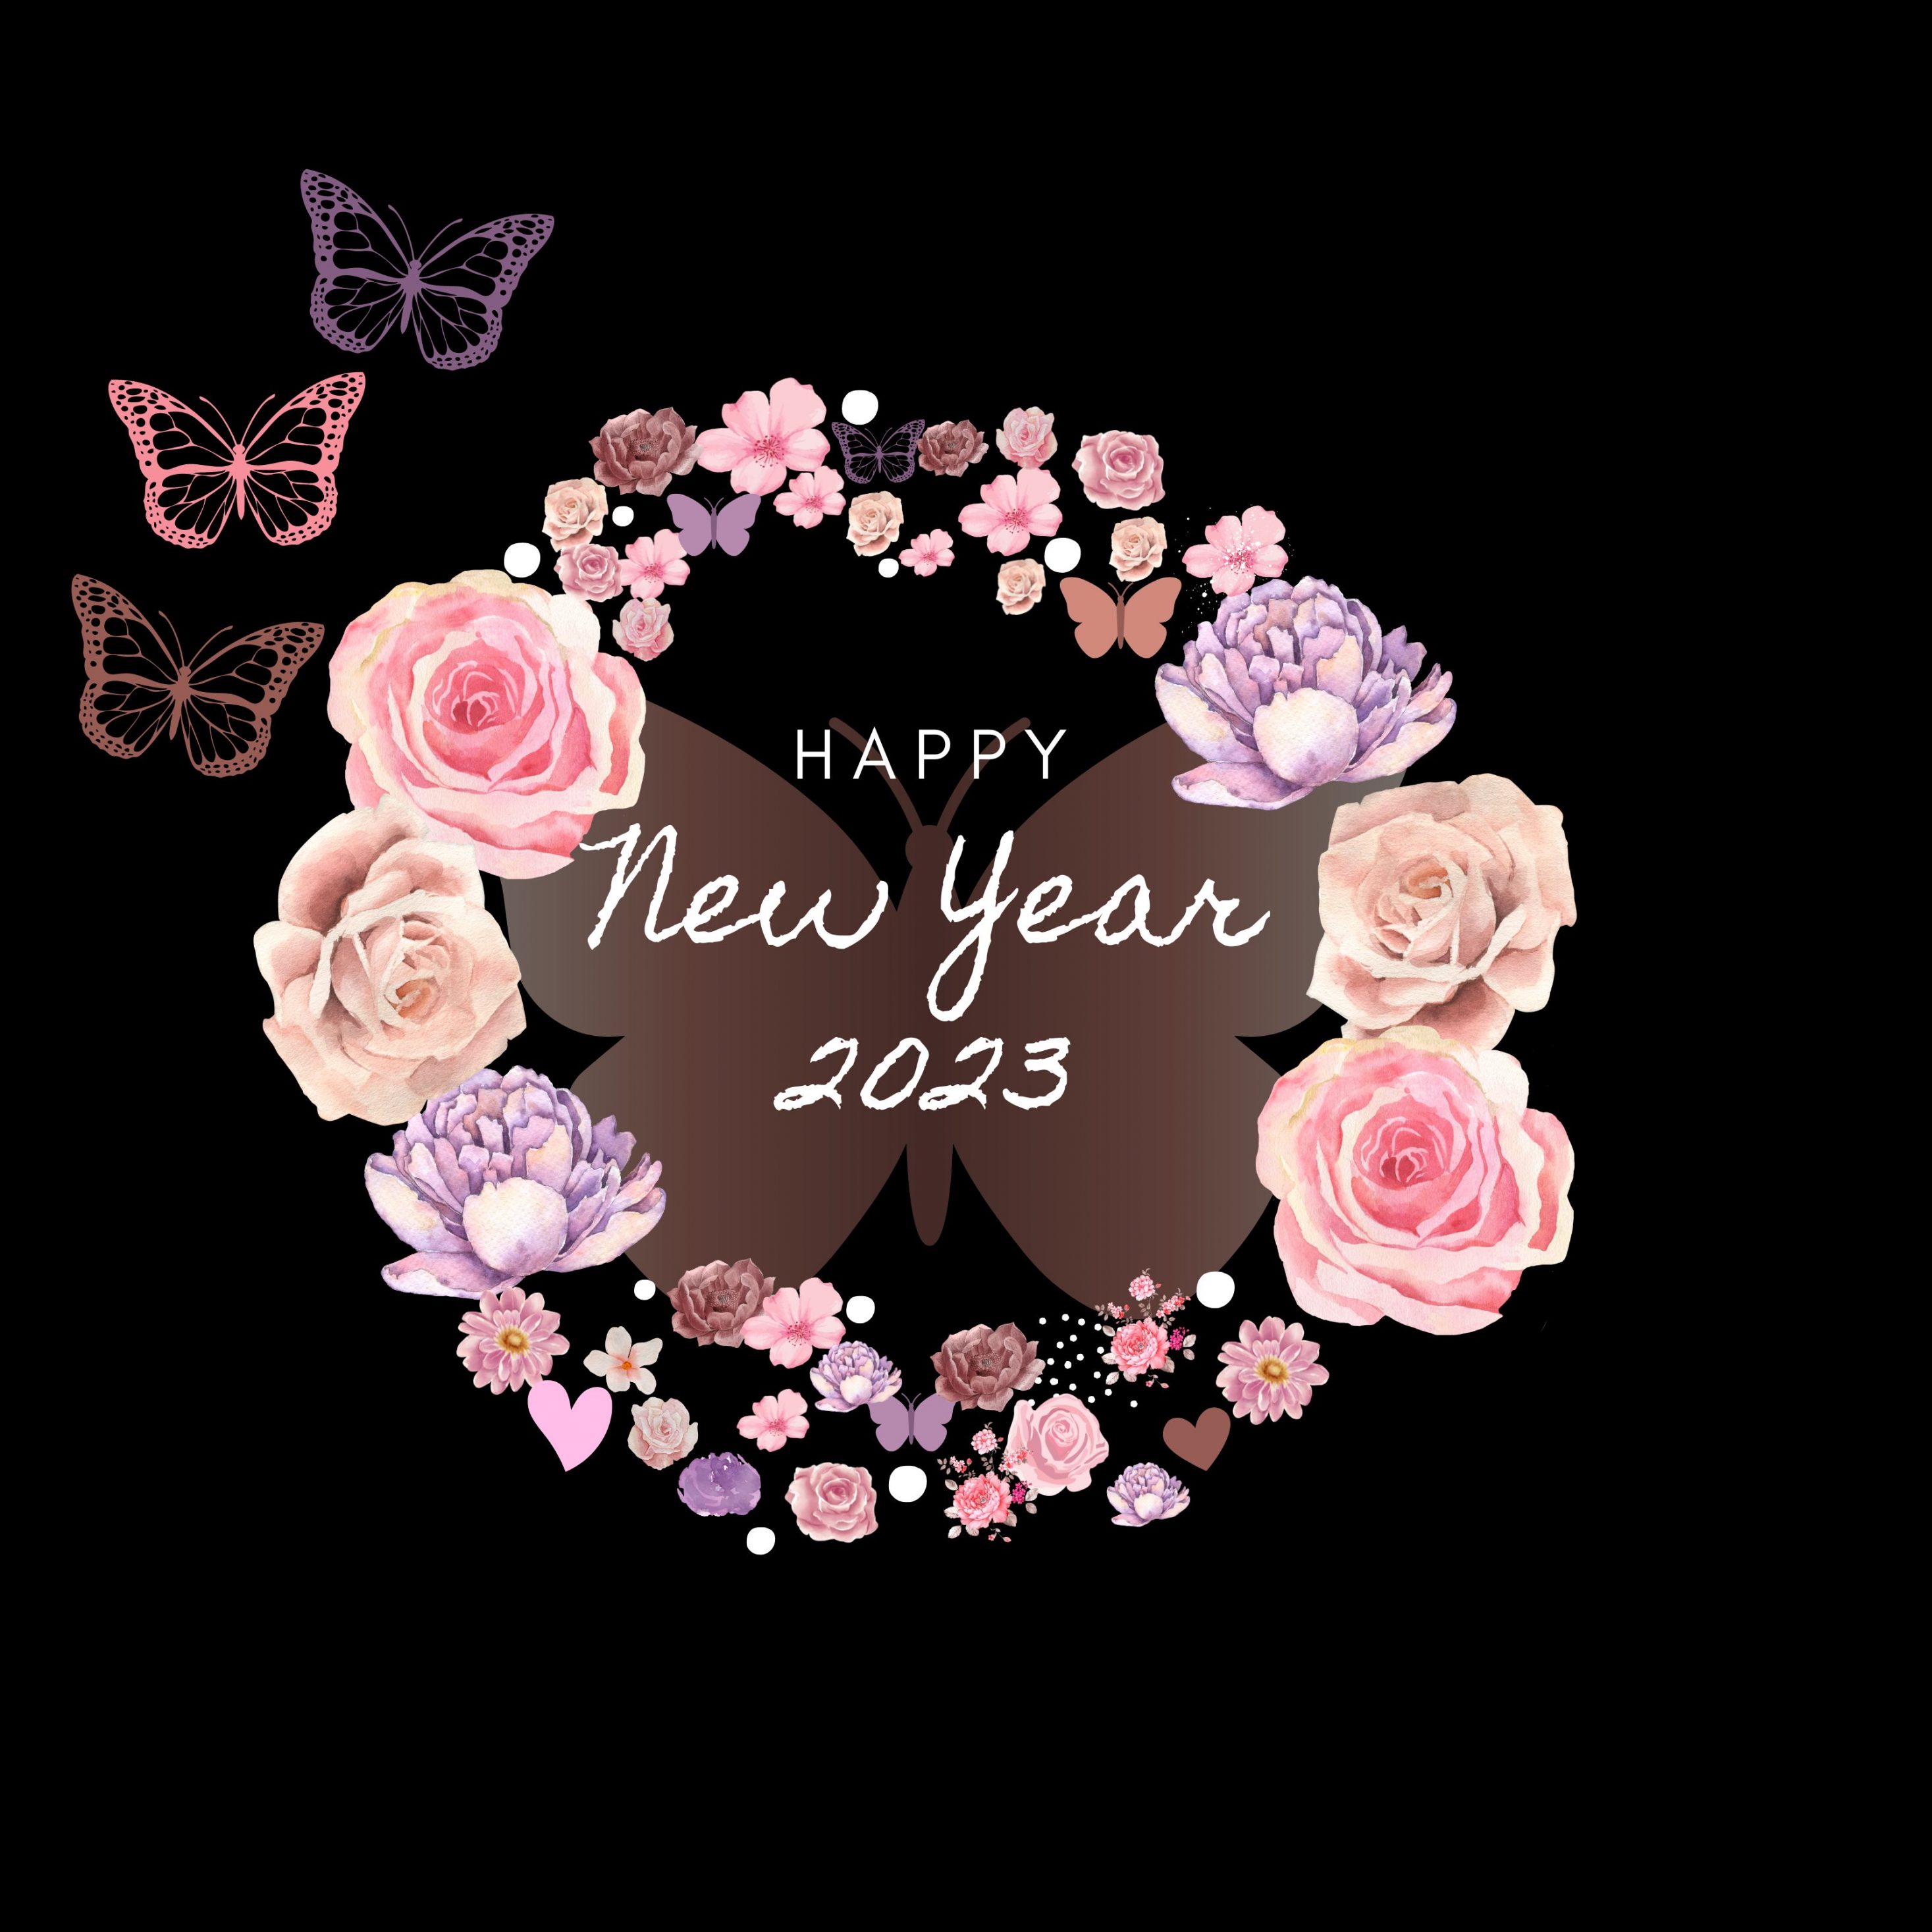 2934x2934 iOS iPad wallpaper 4k Pink Floral Wreath Ipad Wallpaper 2934x2934 pixels resolution